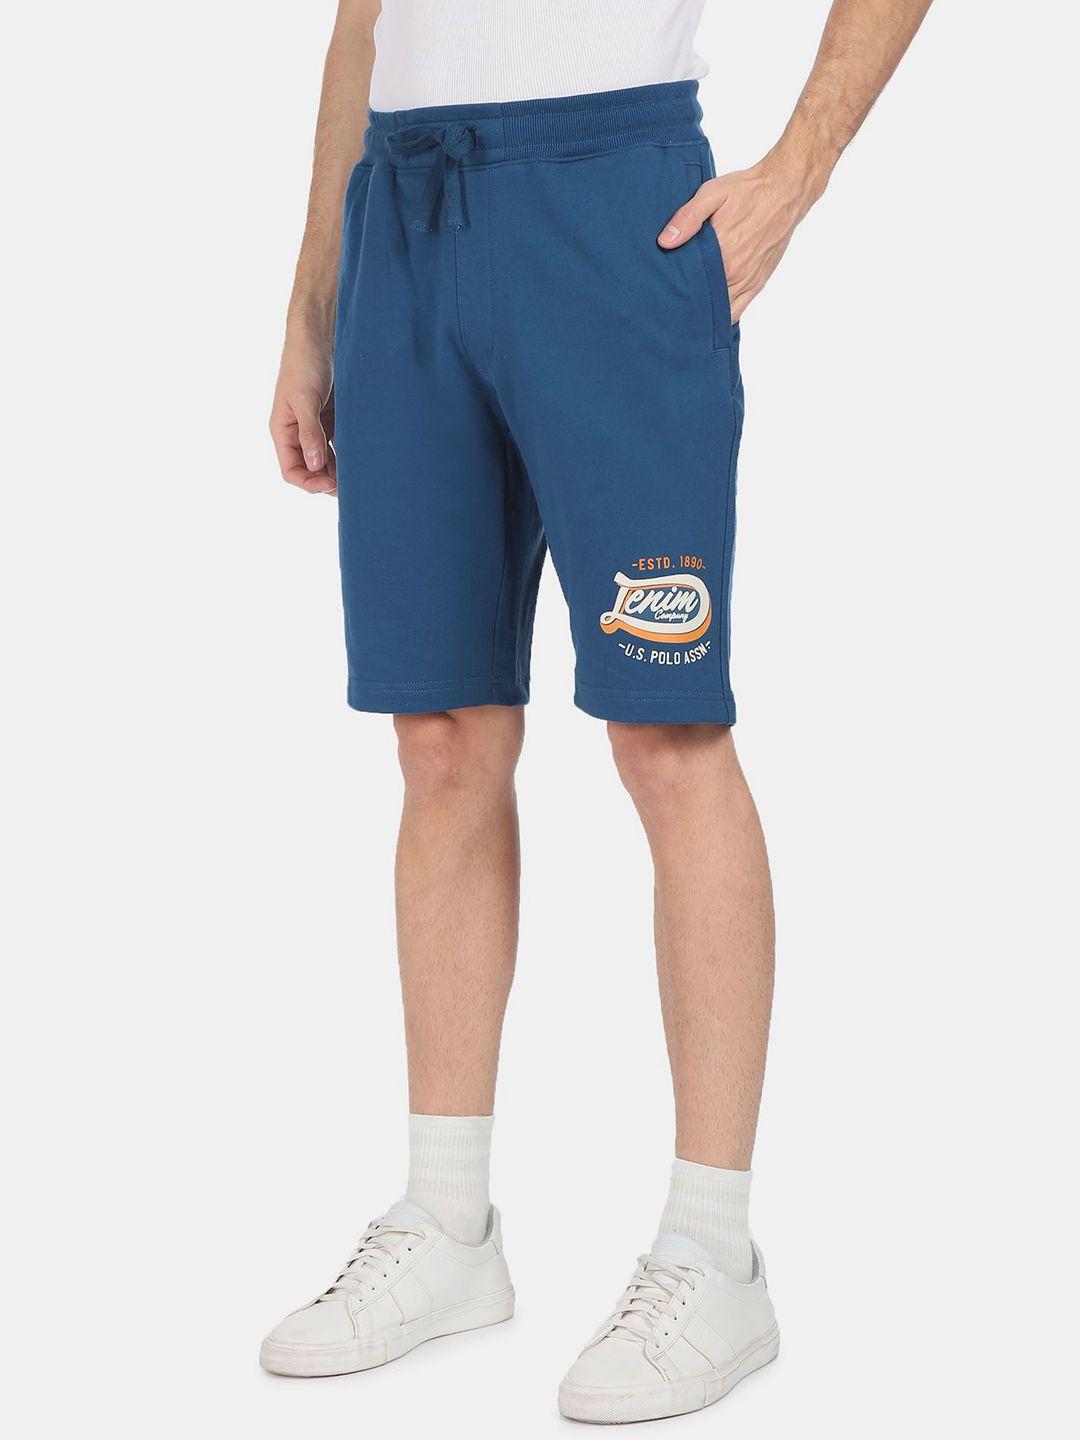 u s polo assn denim co men blue & grey printed slim fit shorts